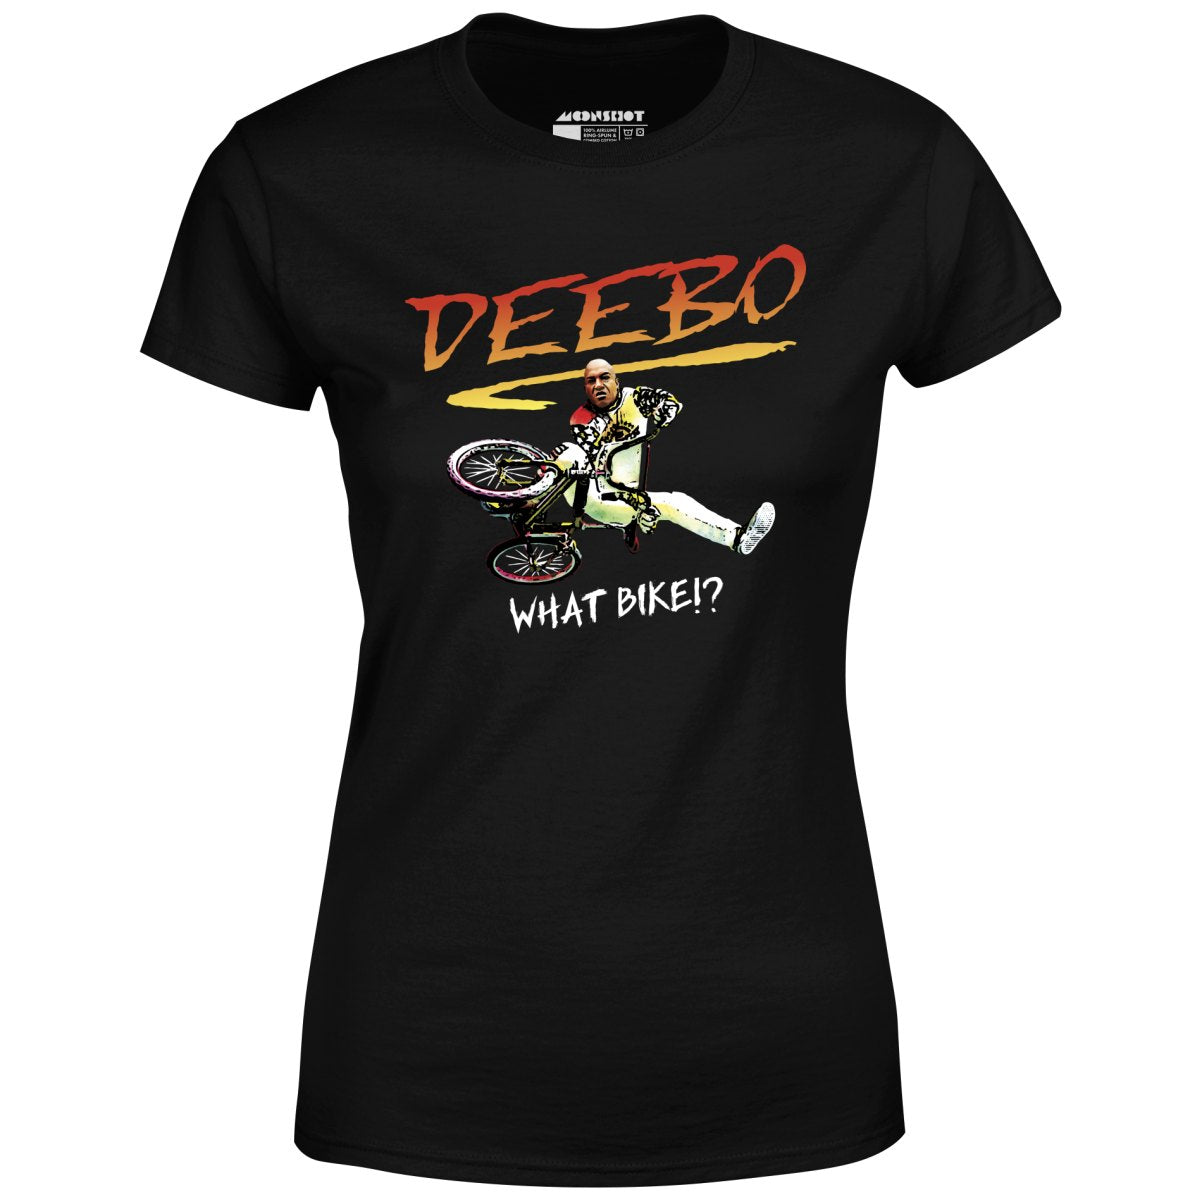 Deebo Rad BMX Bike Parody Mashup - Women's T-Shirt